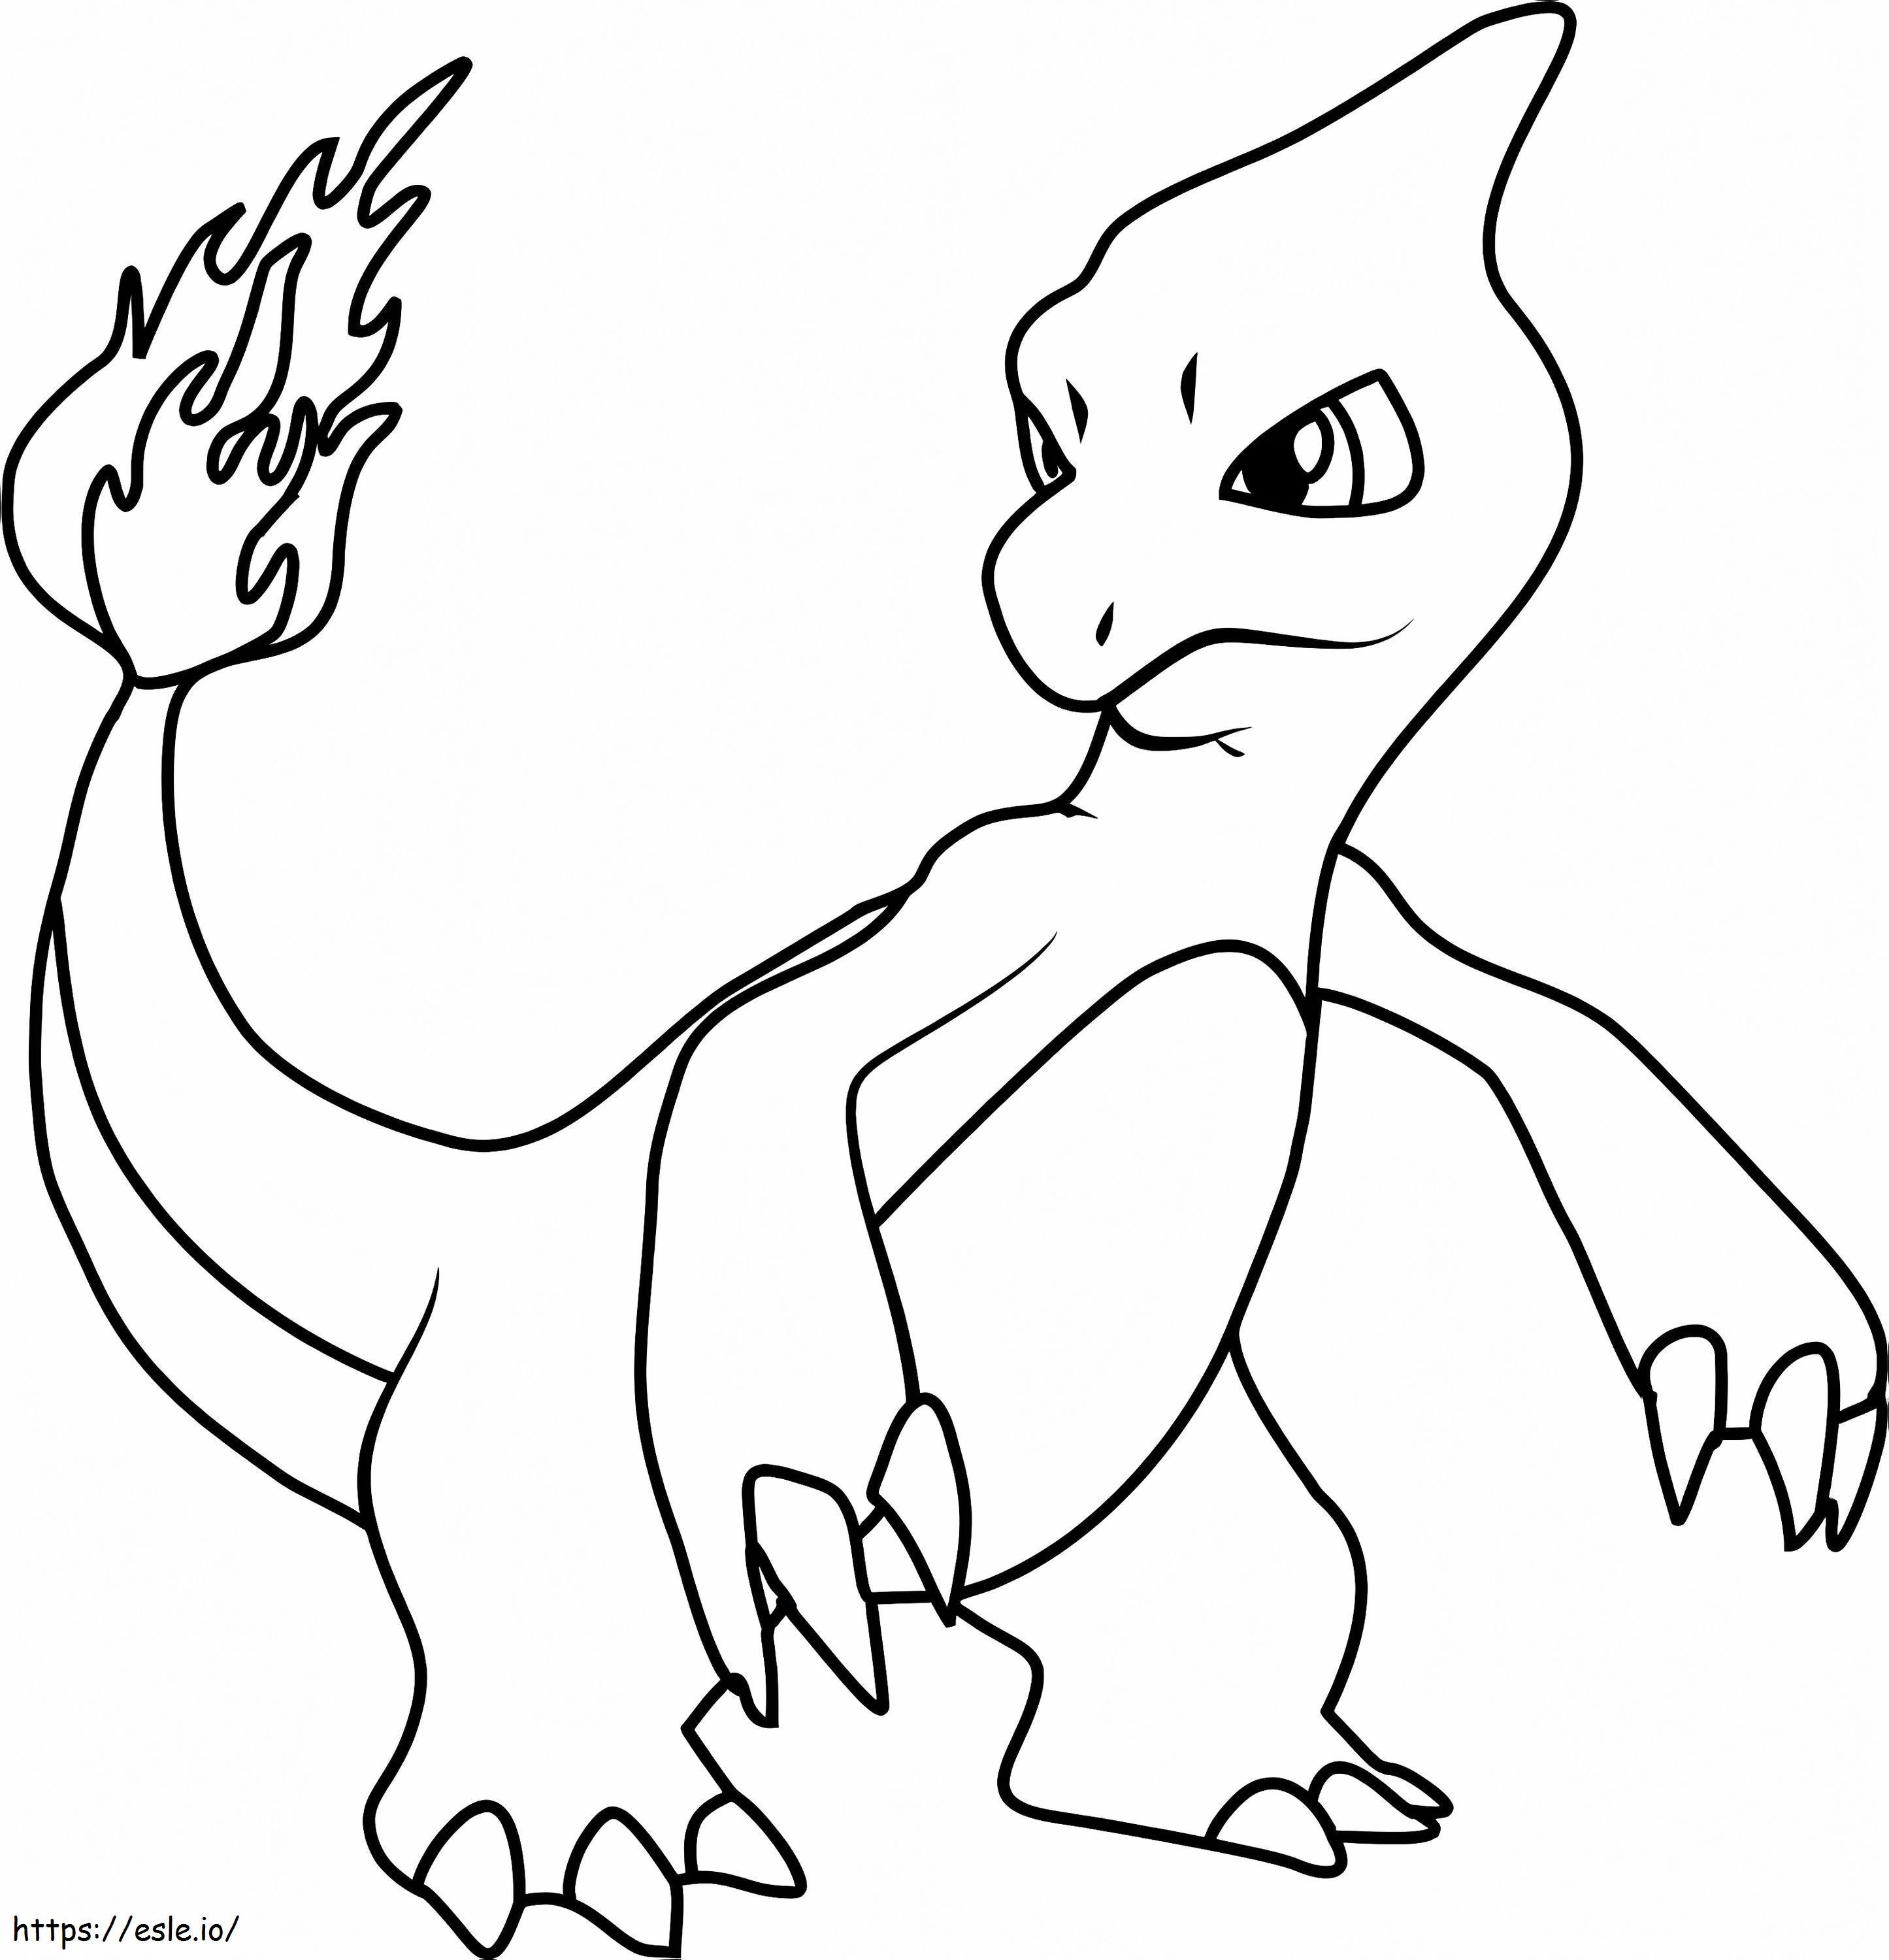 Charmeleon in Pokémon ausmalbilder